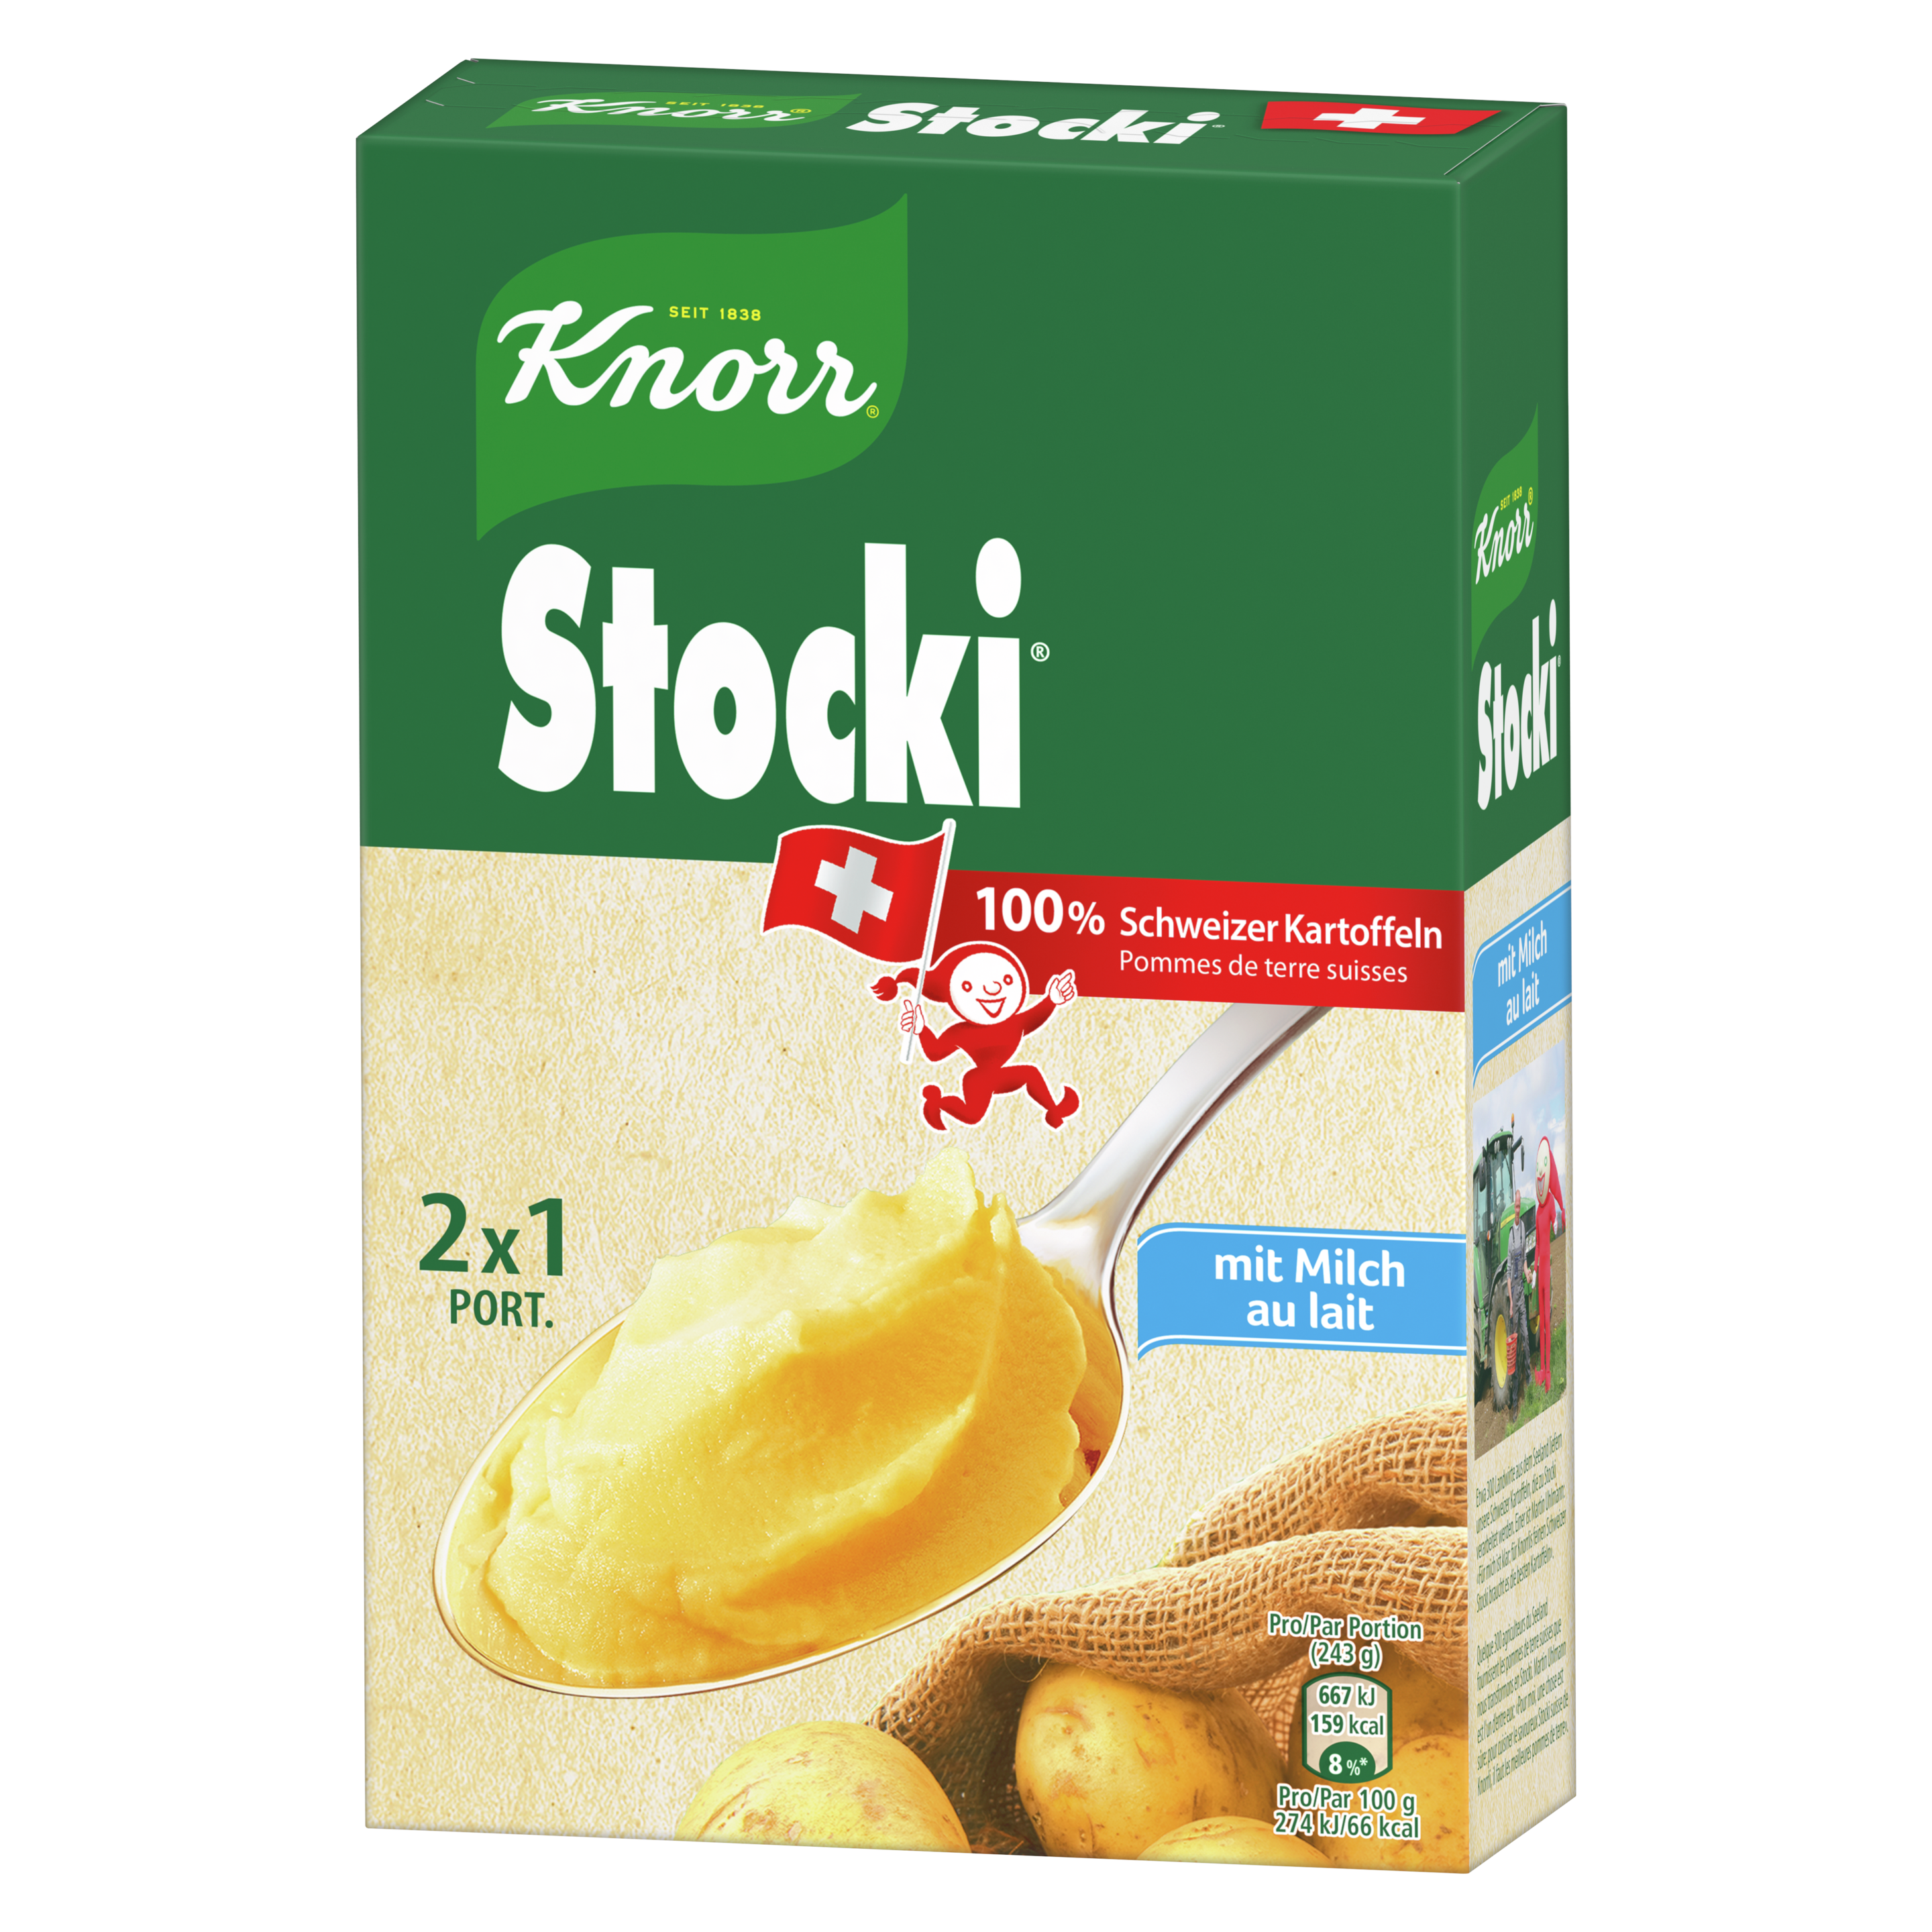 KNORR Stocki Kartoffelstock mit Milch Packung 2 x 1 Portion